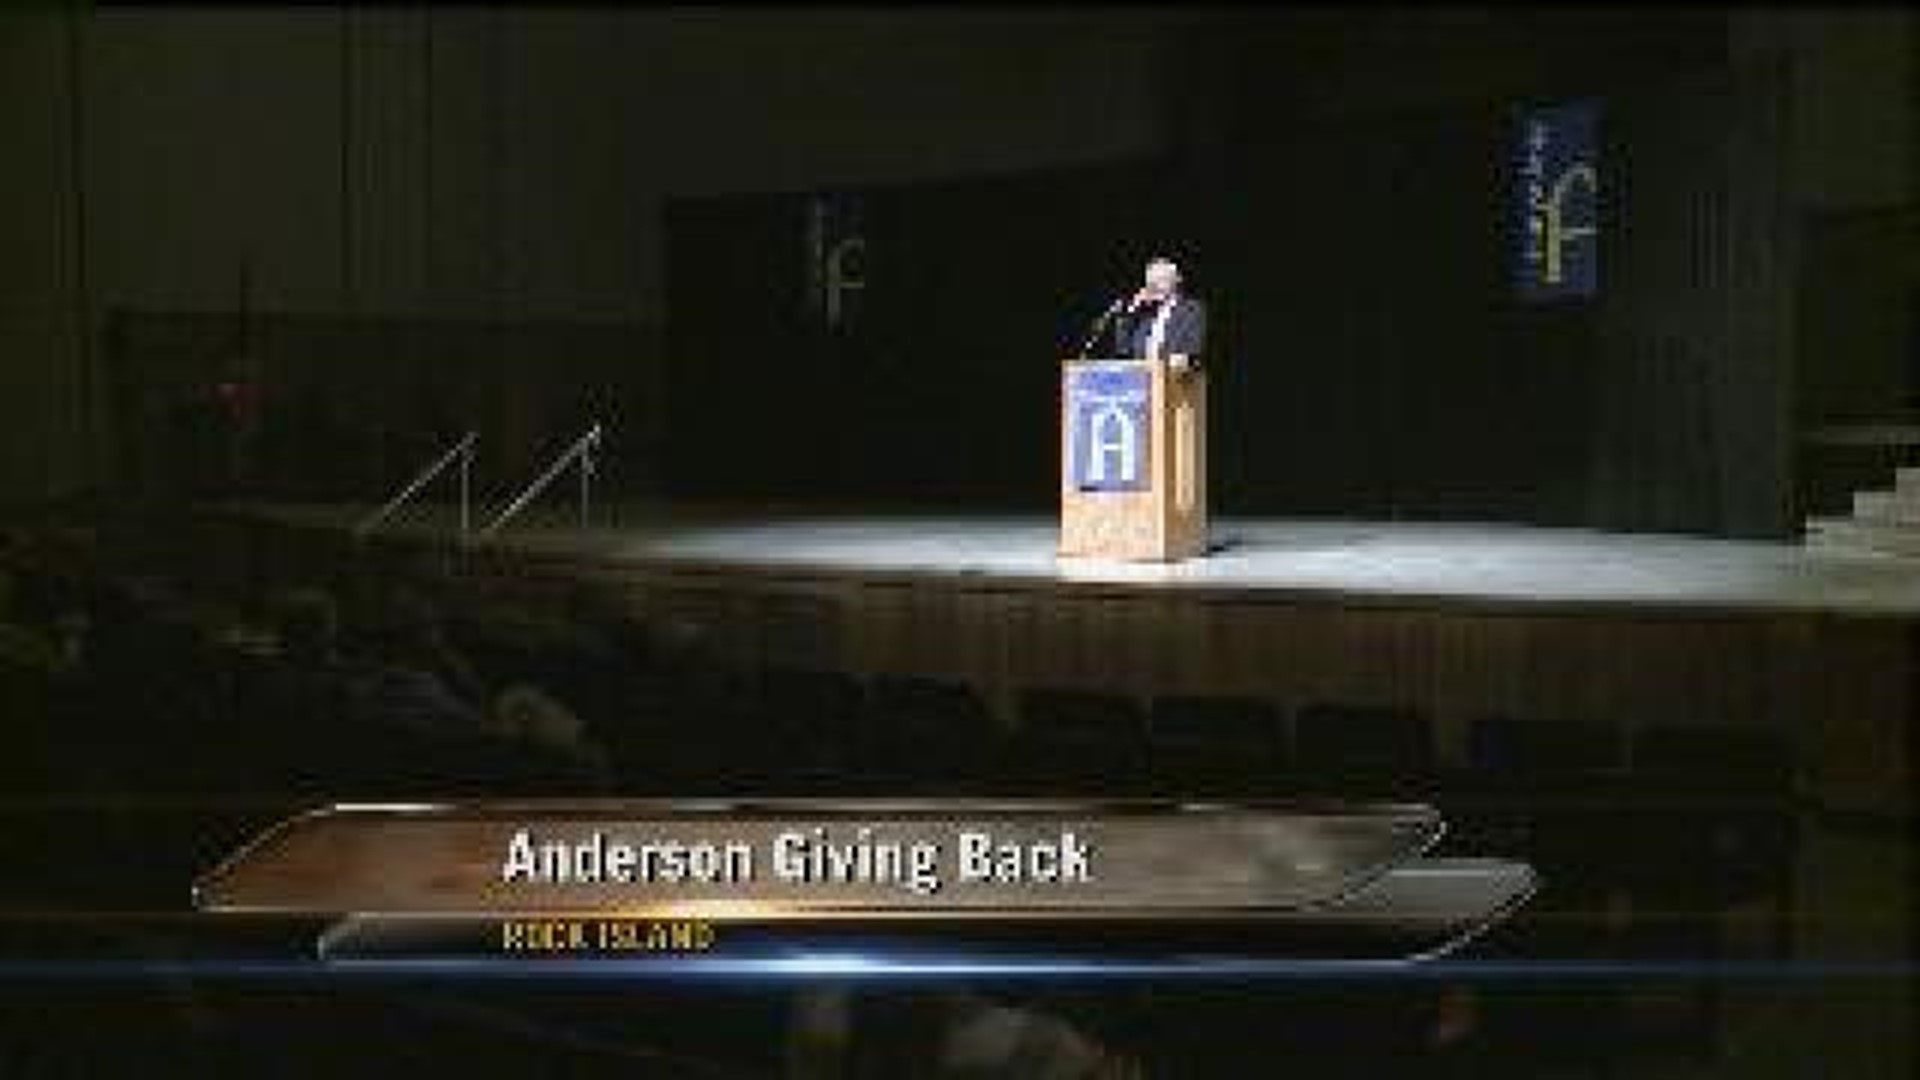 Ken Anderson Giving Back